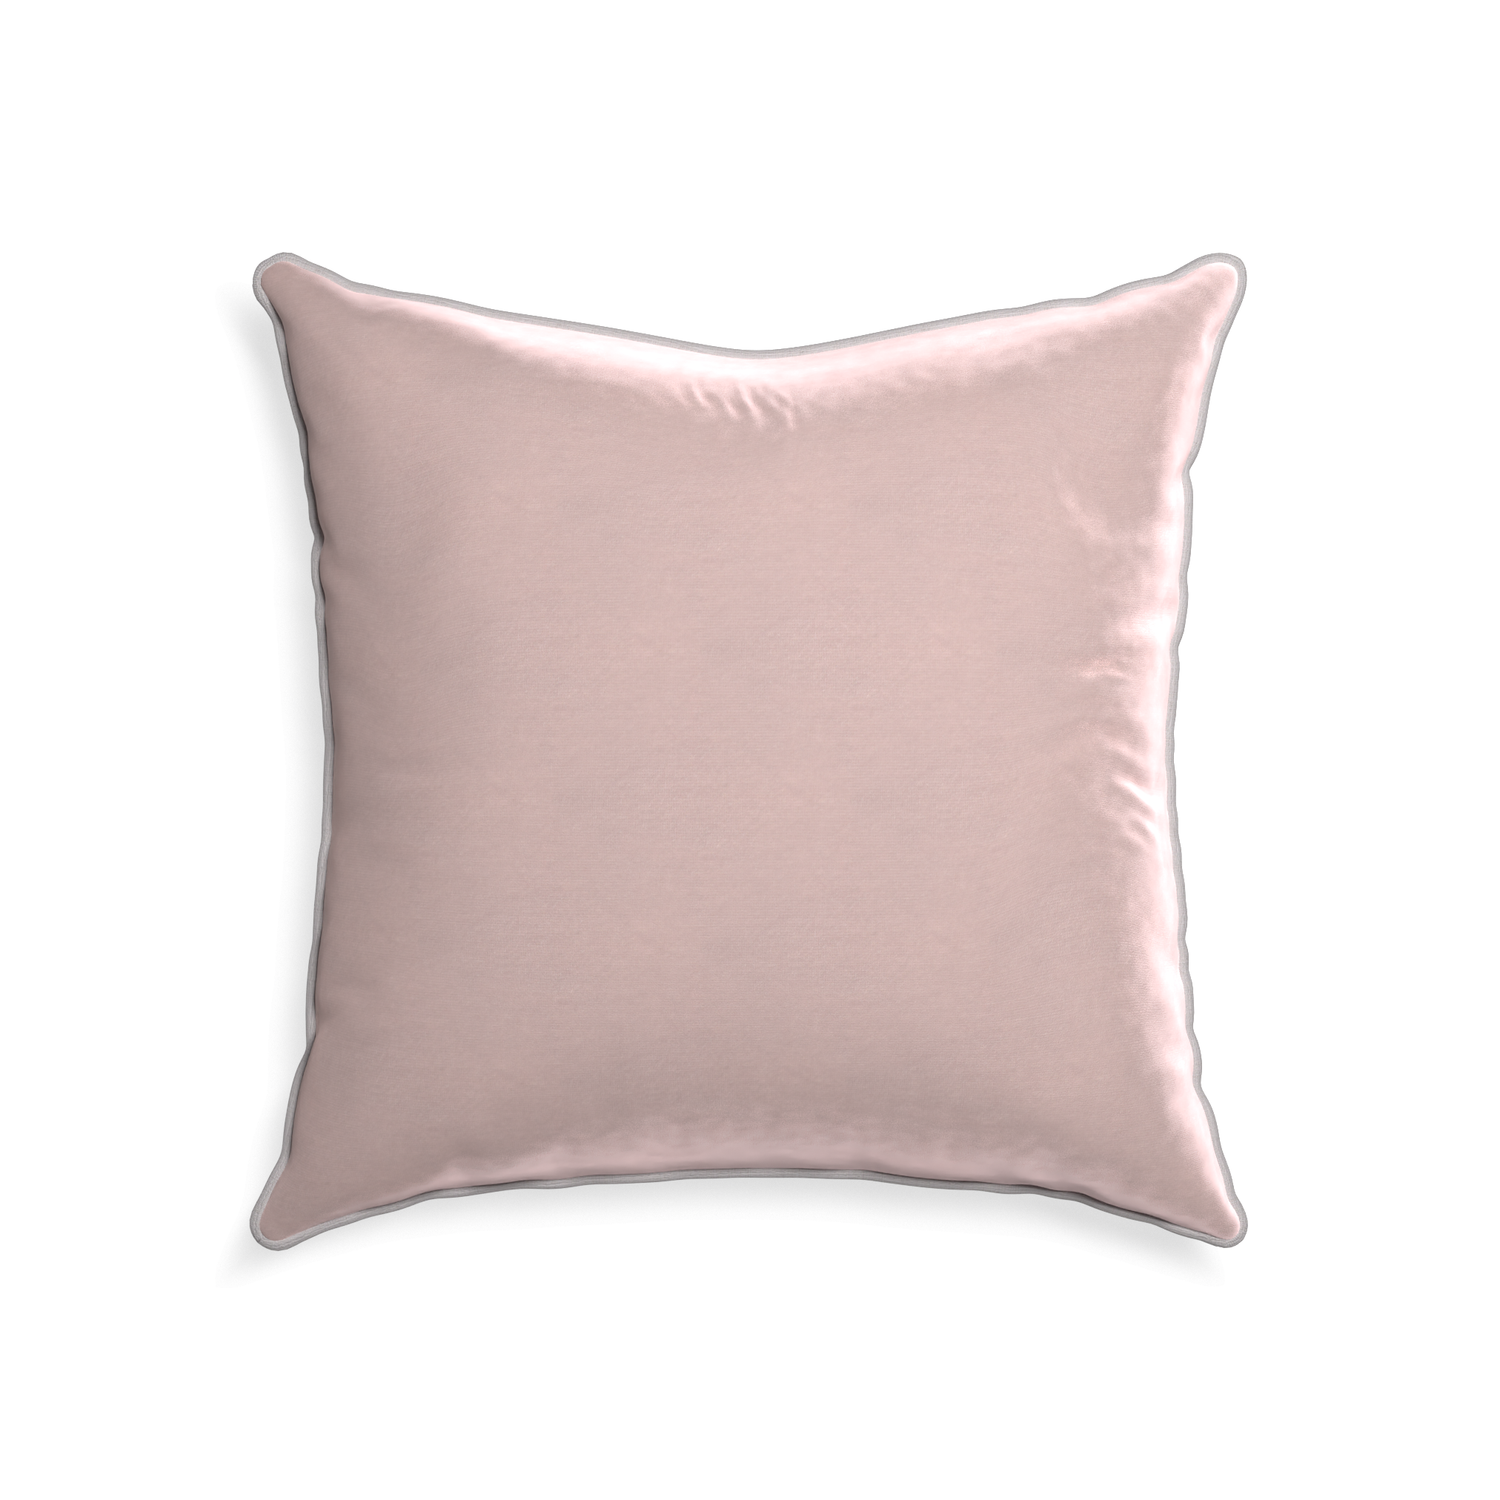 22-square rose velvet custom pillow with pebble piping on white background